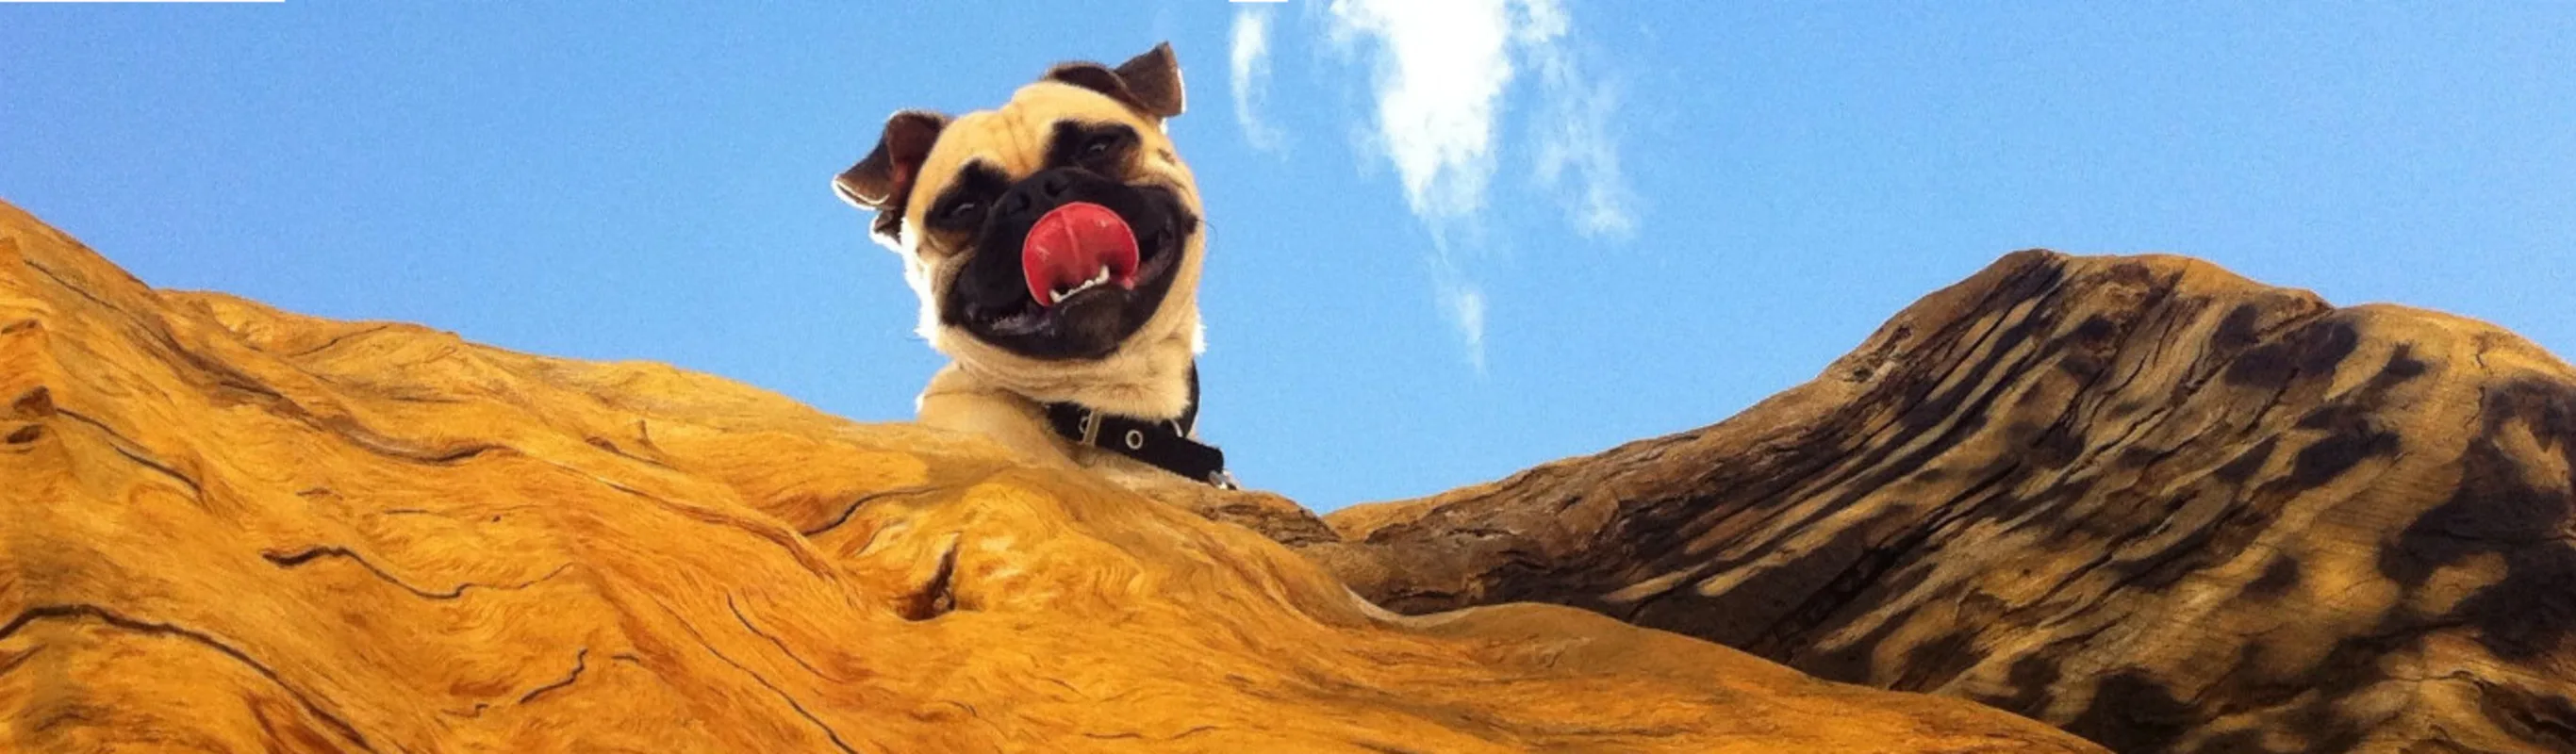 Dog Looking Down In Desert